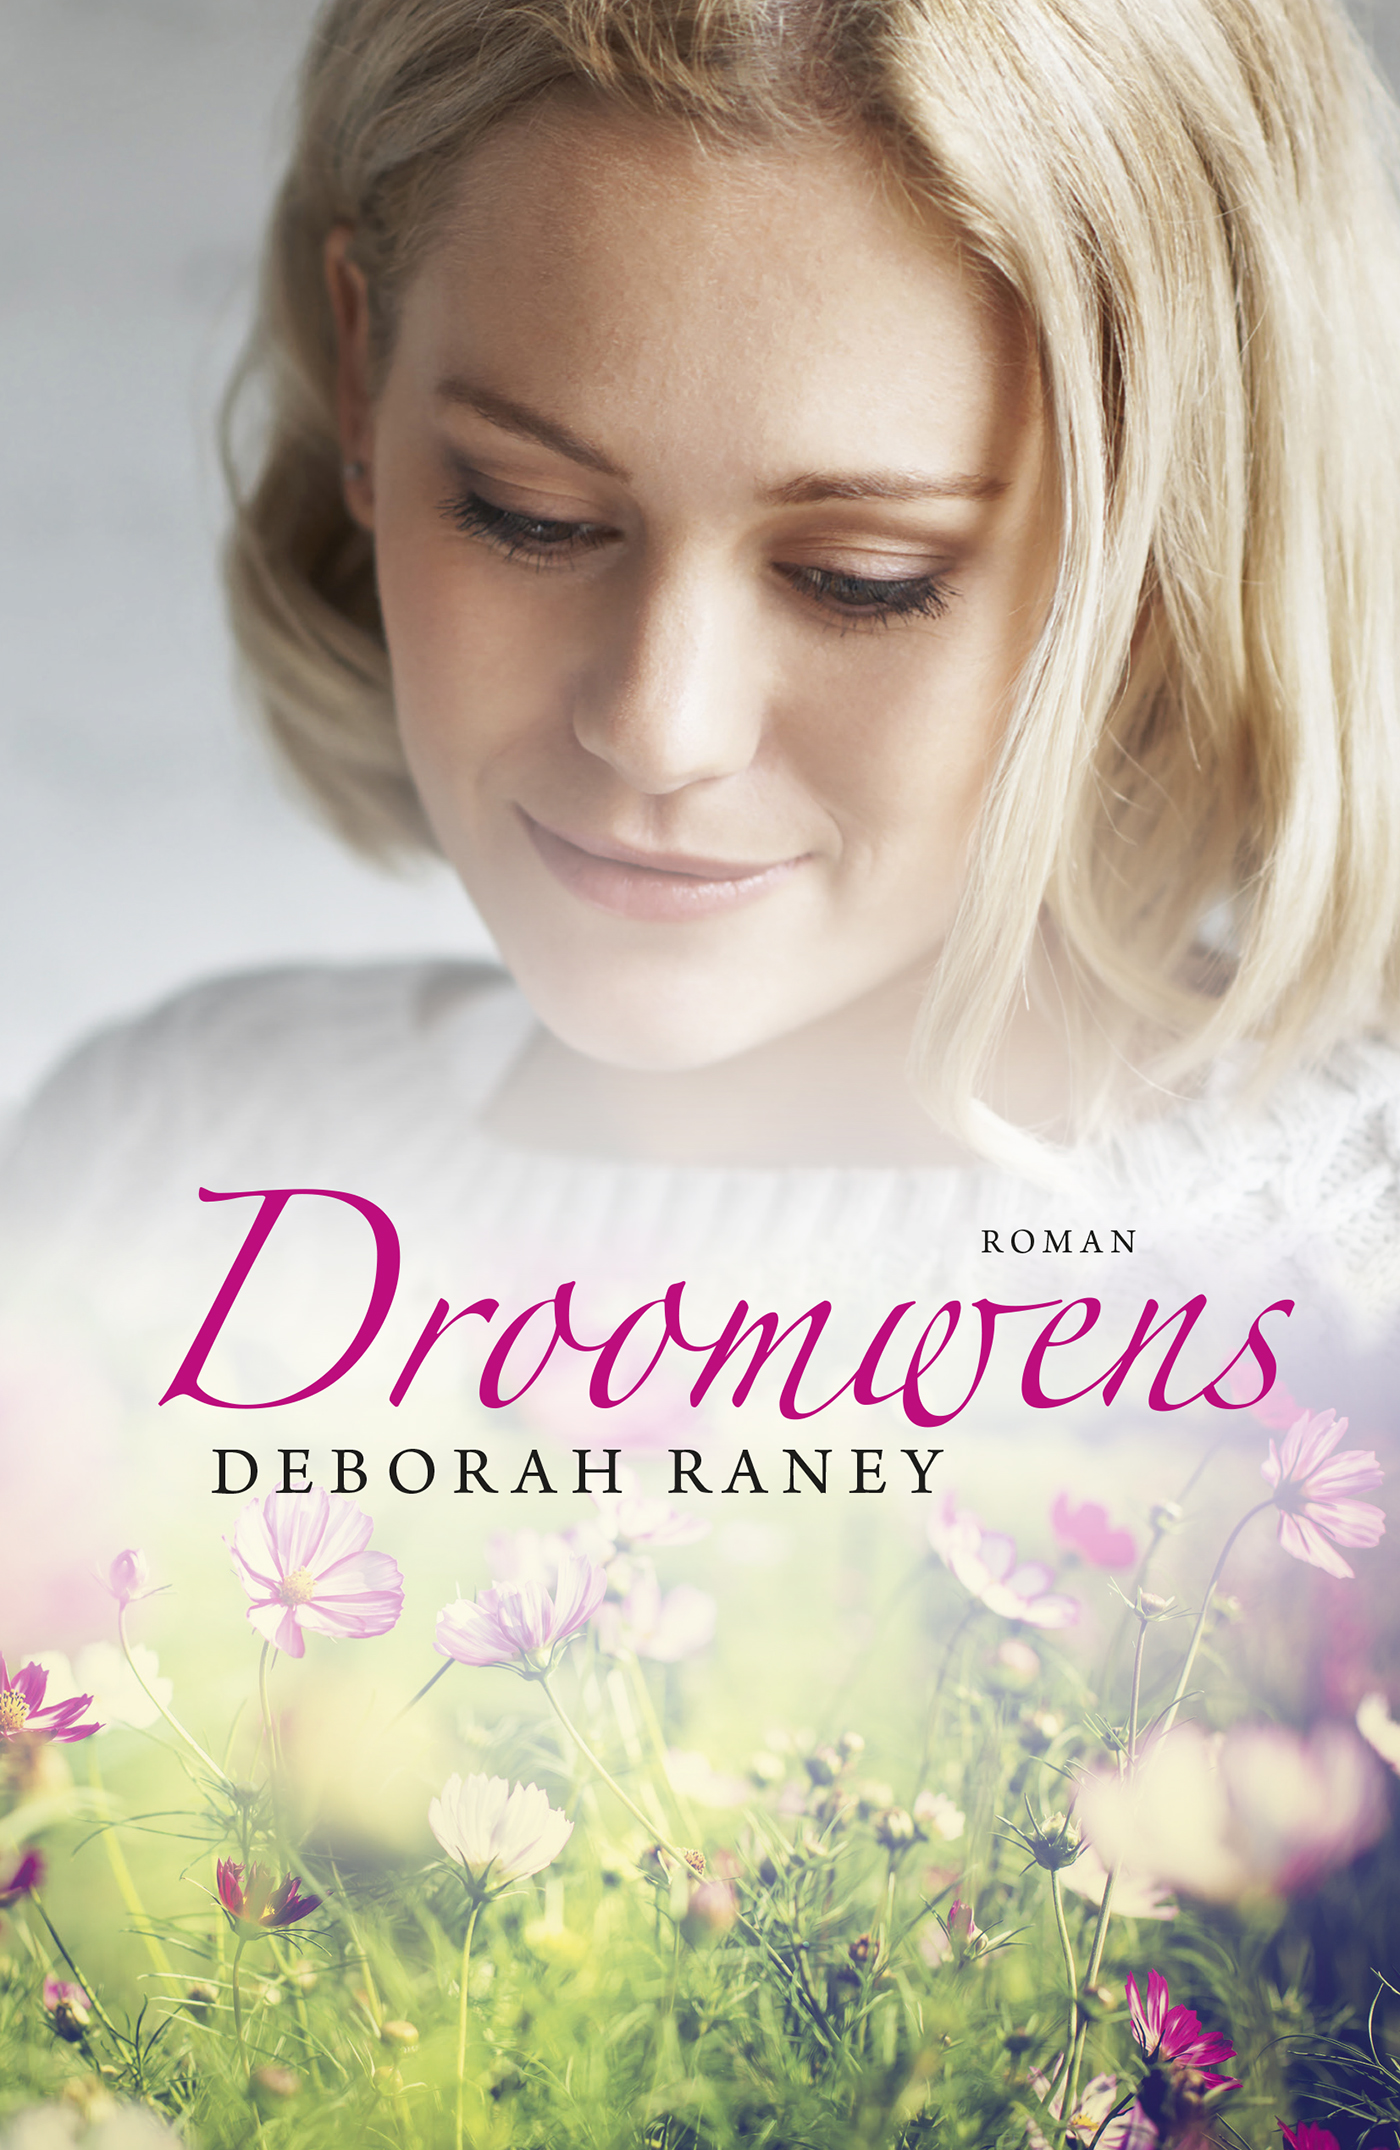 Droomwens (Ebook)